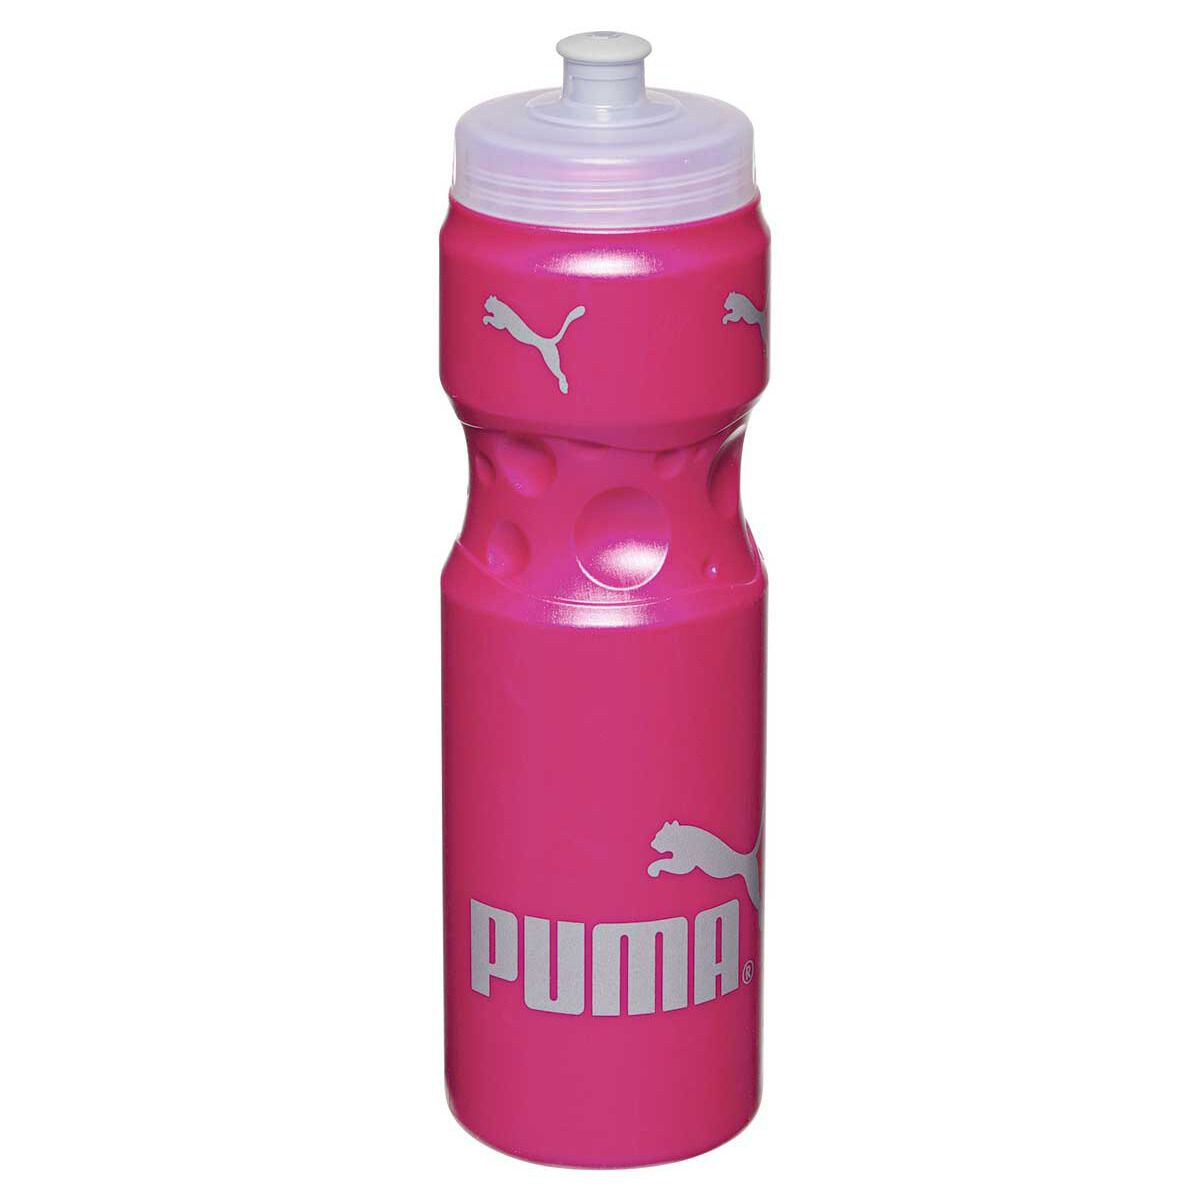 puma bottles online